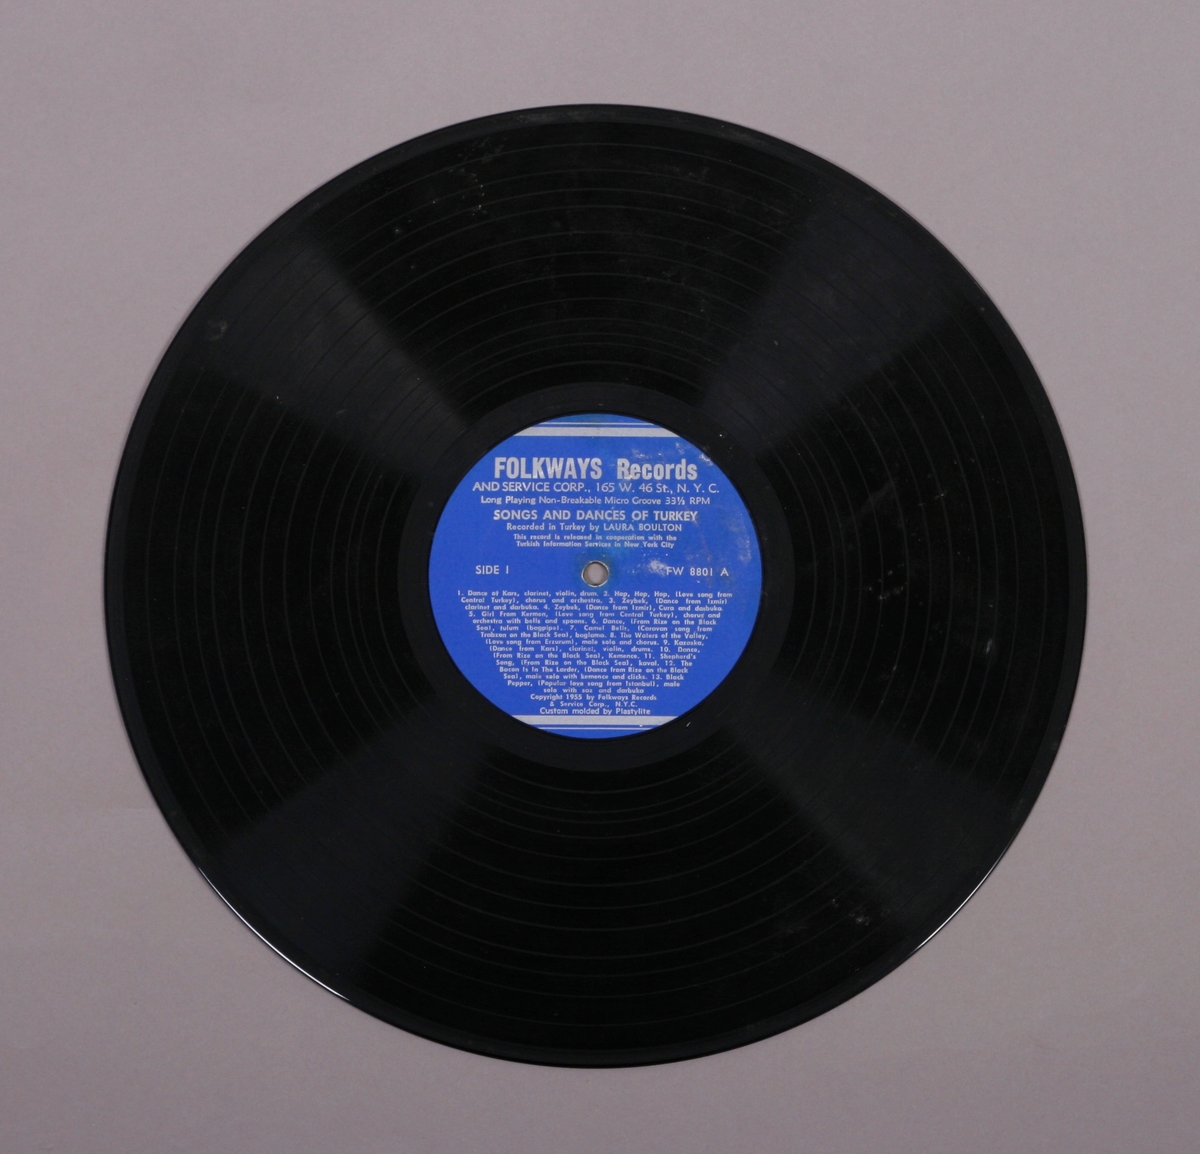 Grammofonplate i svart vinyl. Plata ligger i en uoriginal papirlomme med plastfôr merket "Angel Revords".